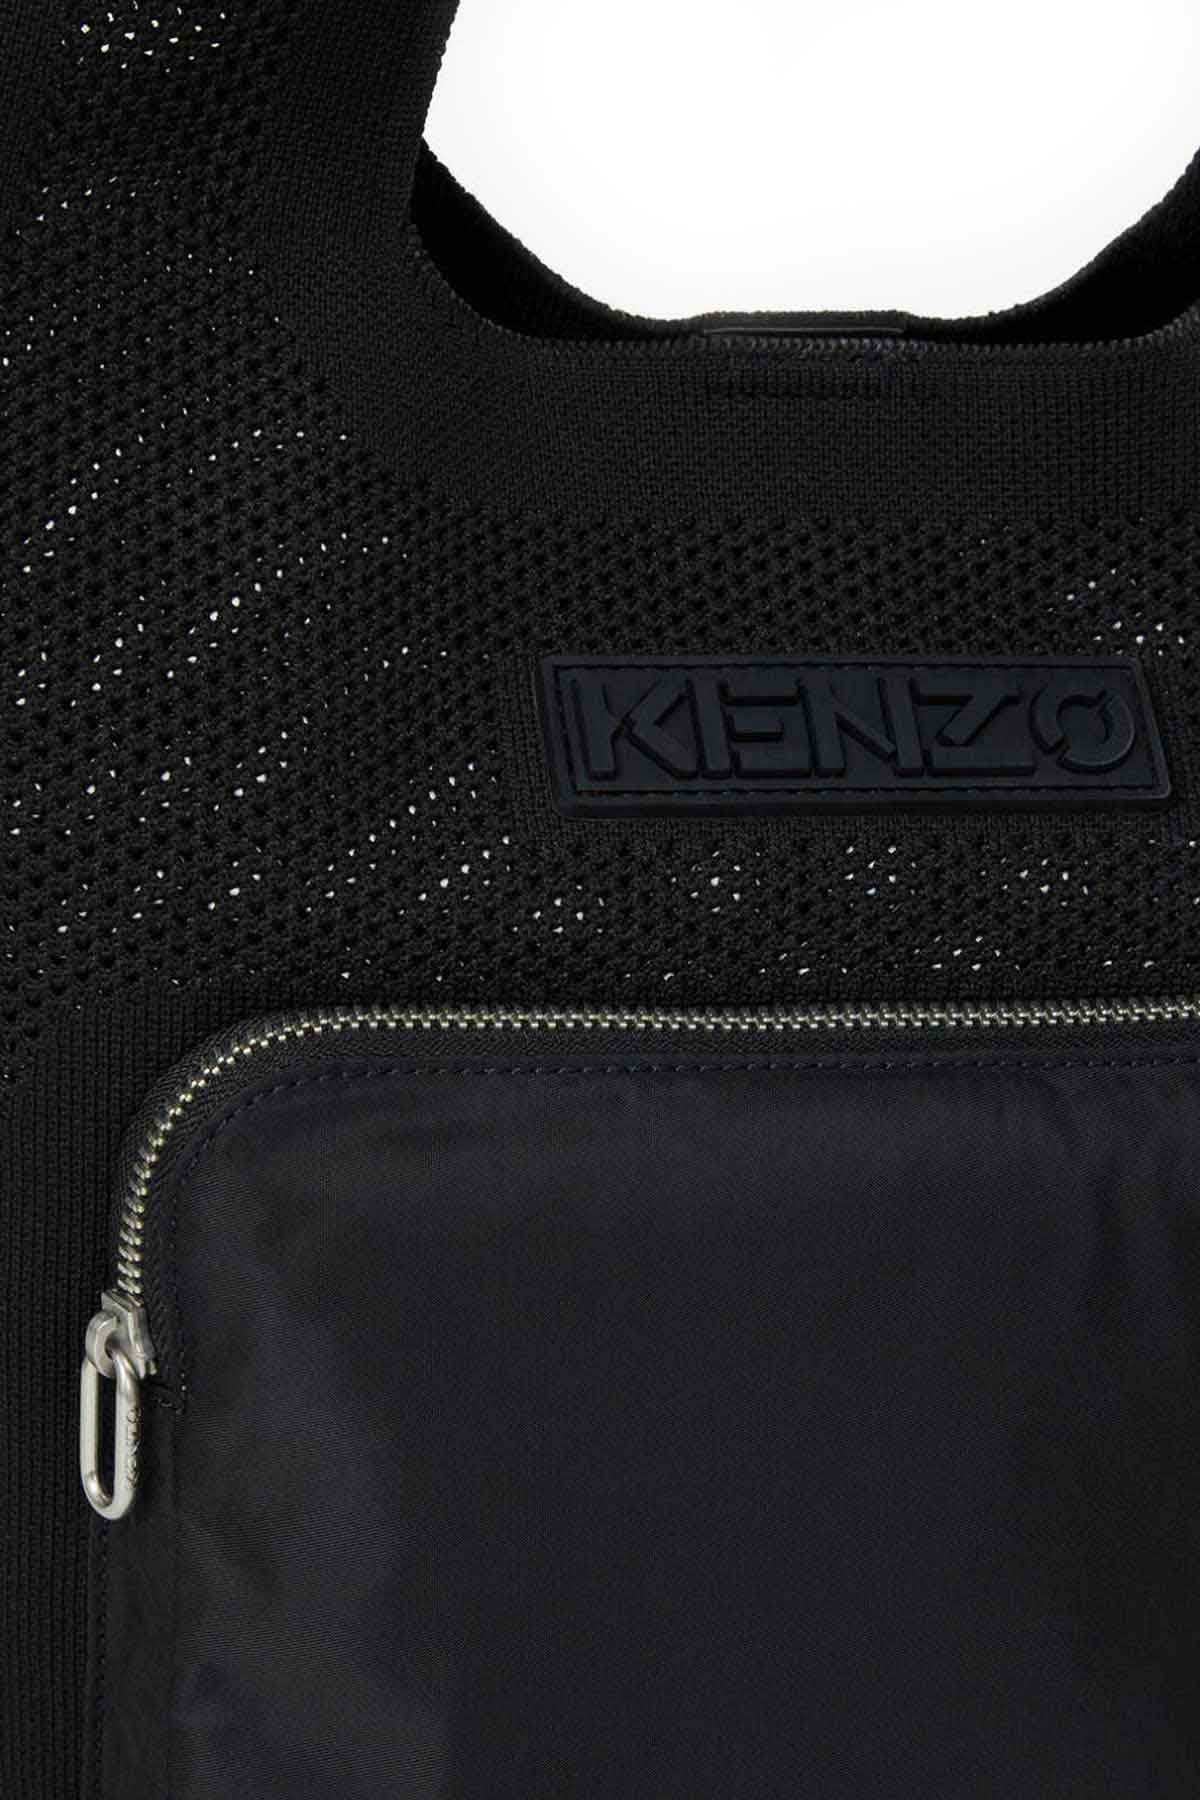 Kenzo Shopping Bag Tote Çanta-Libas Trendy Fashion Store